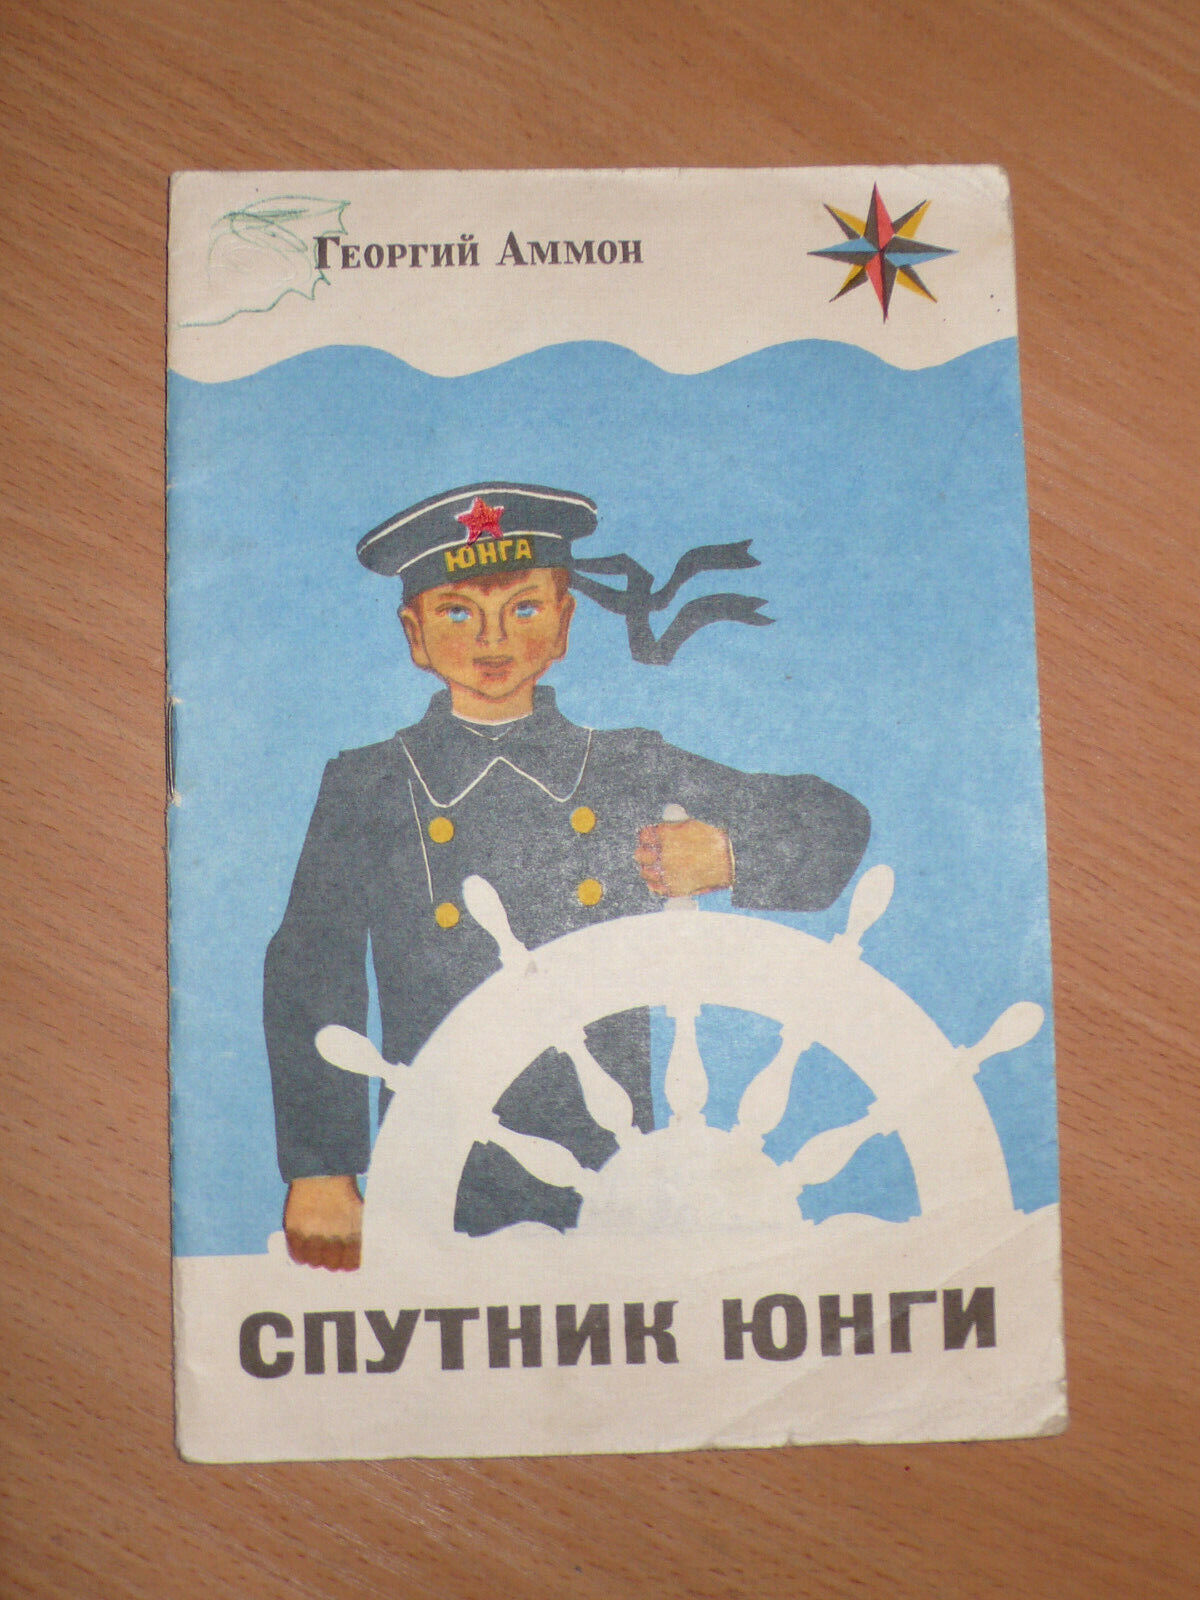 Спутник юнги / Companion of cabin boy  - Russian book